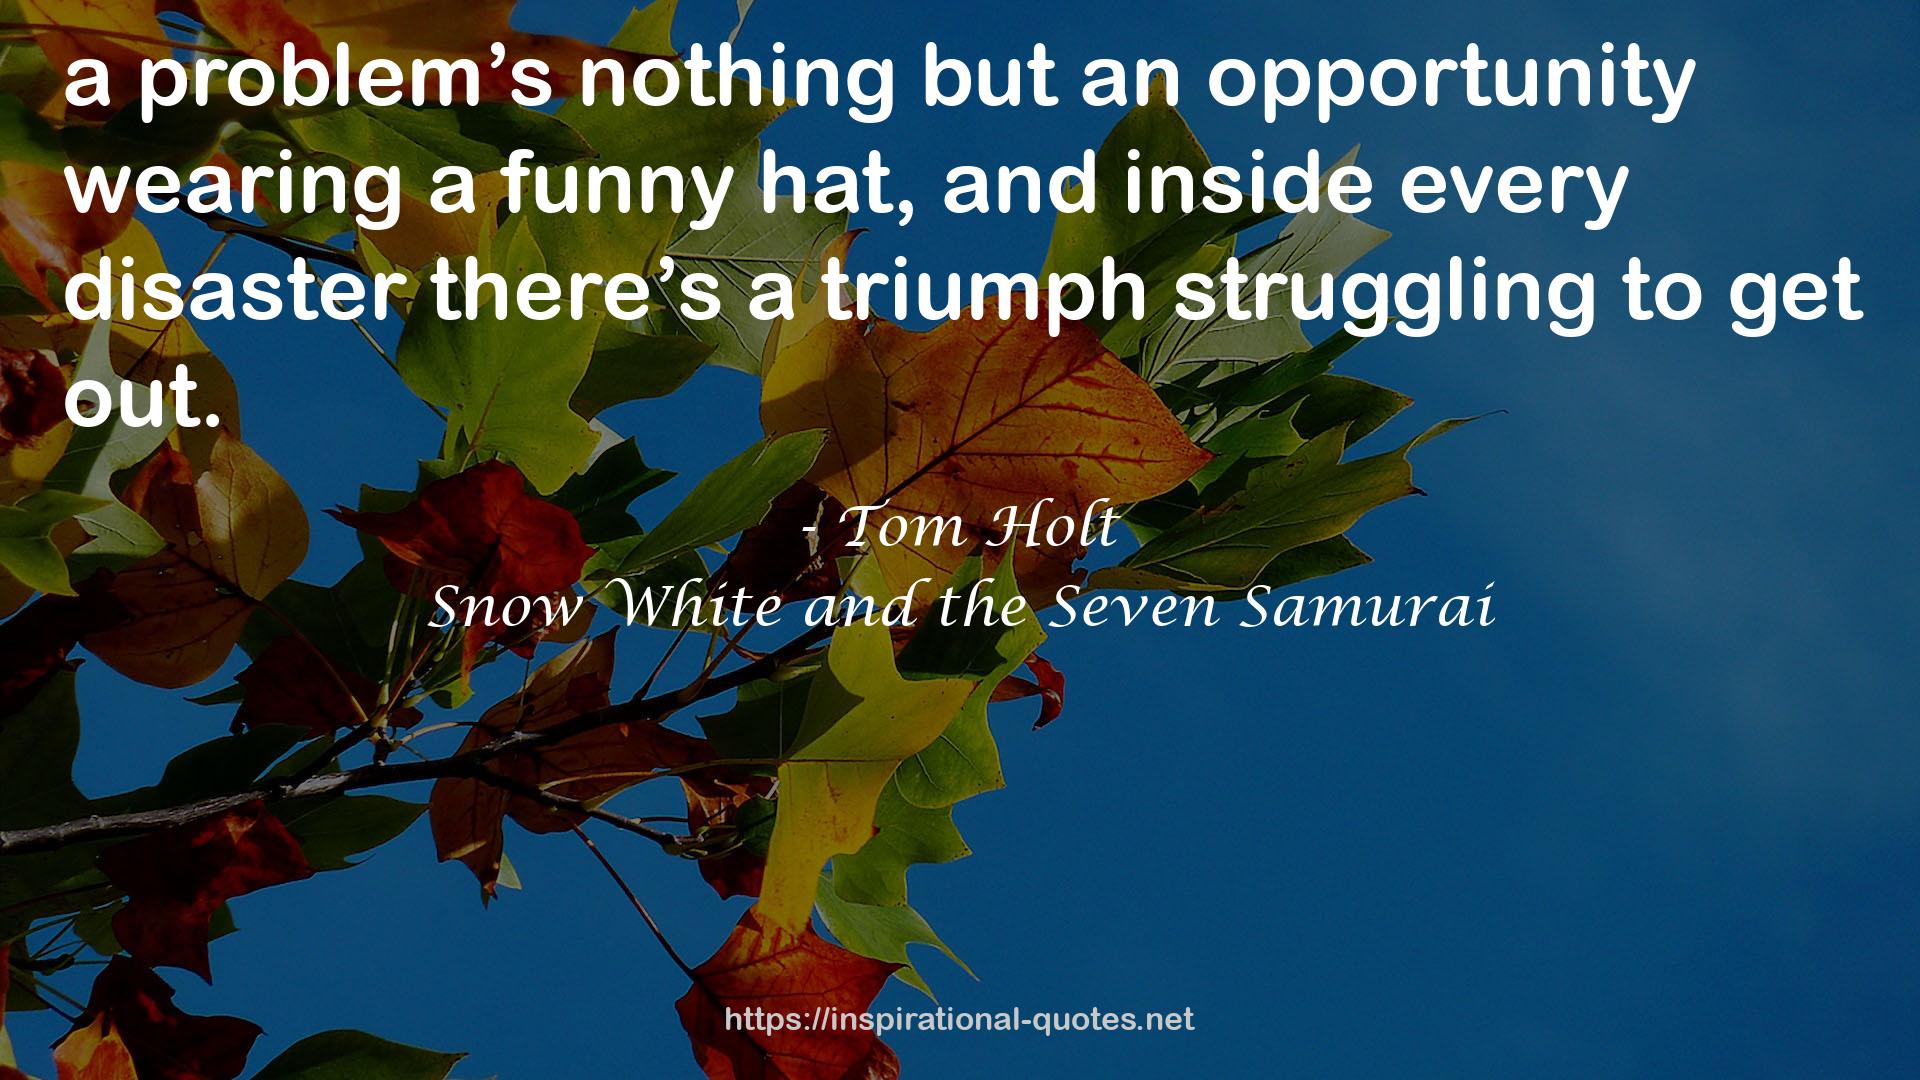 Snow White and the Seven Samurai QUOTES